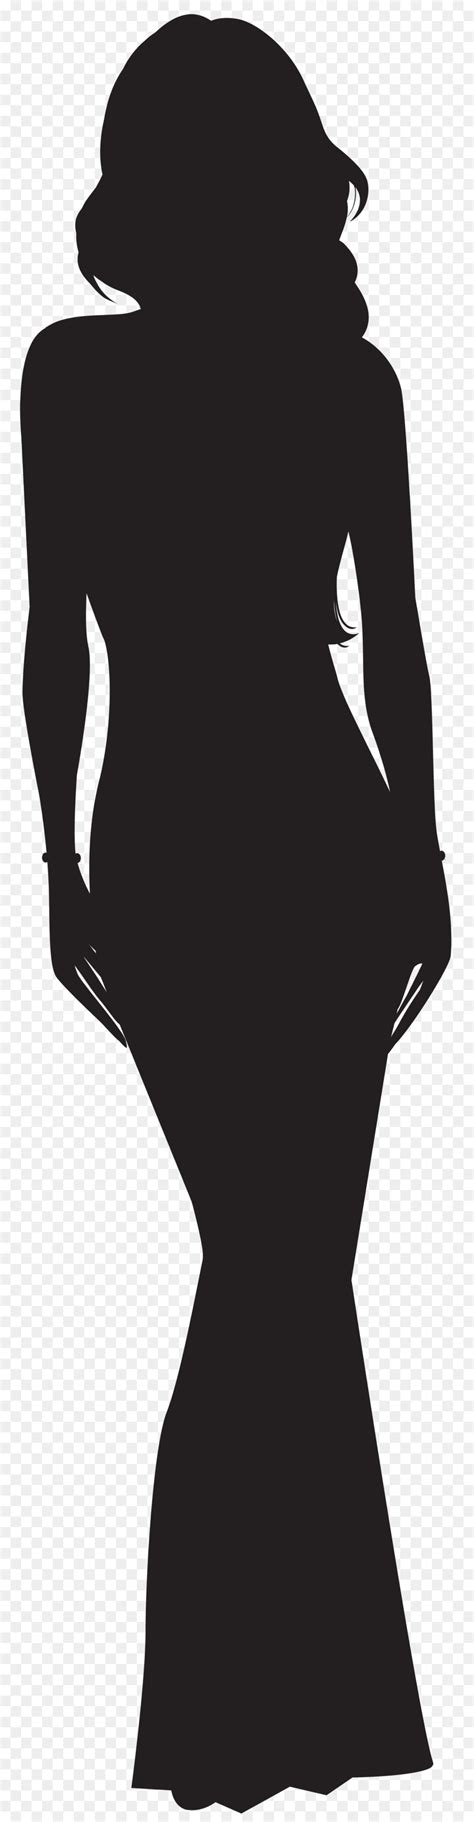 silhouette   black woman   silhouette   black